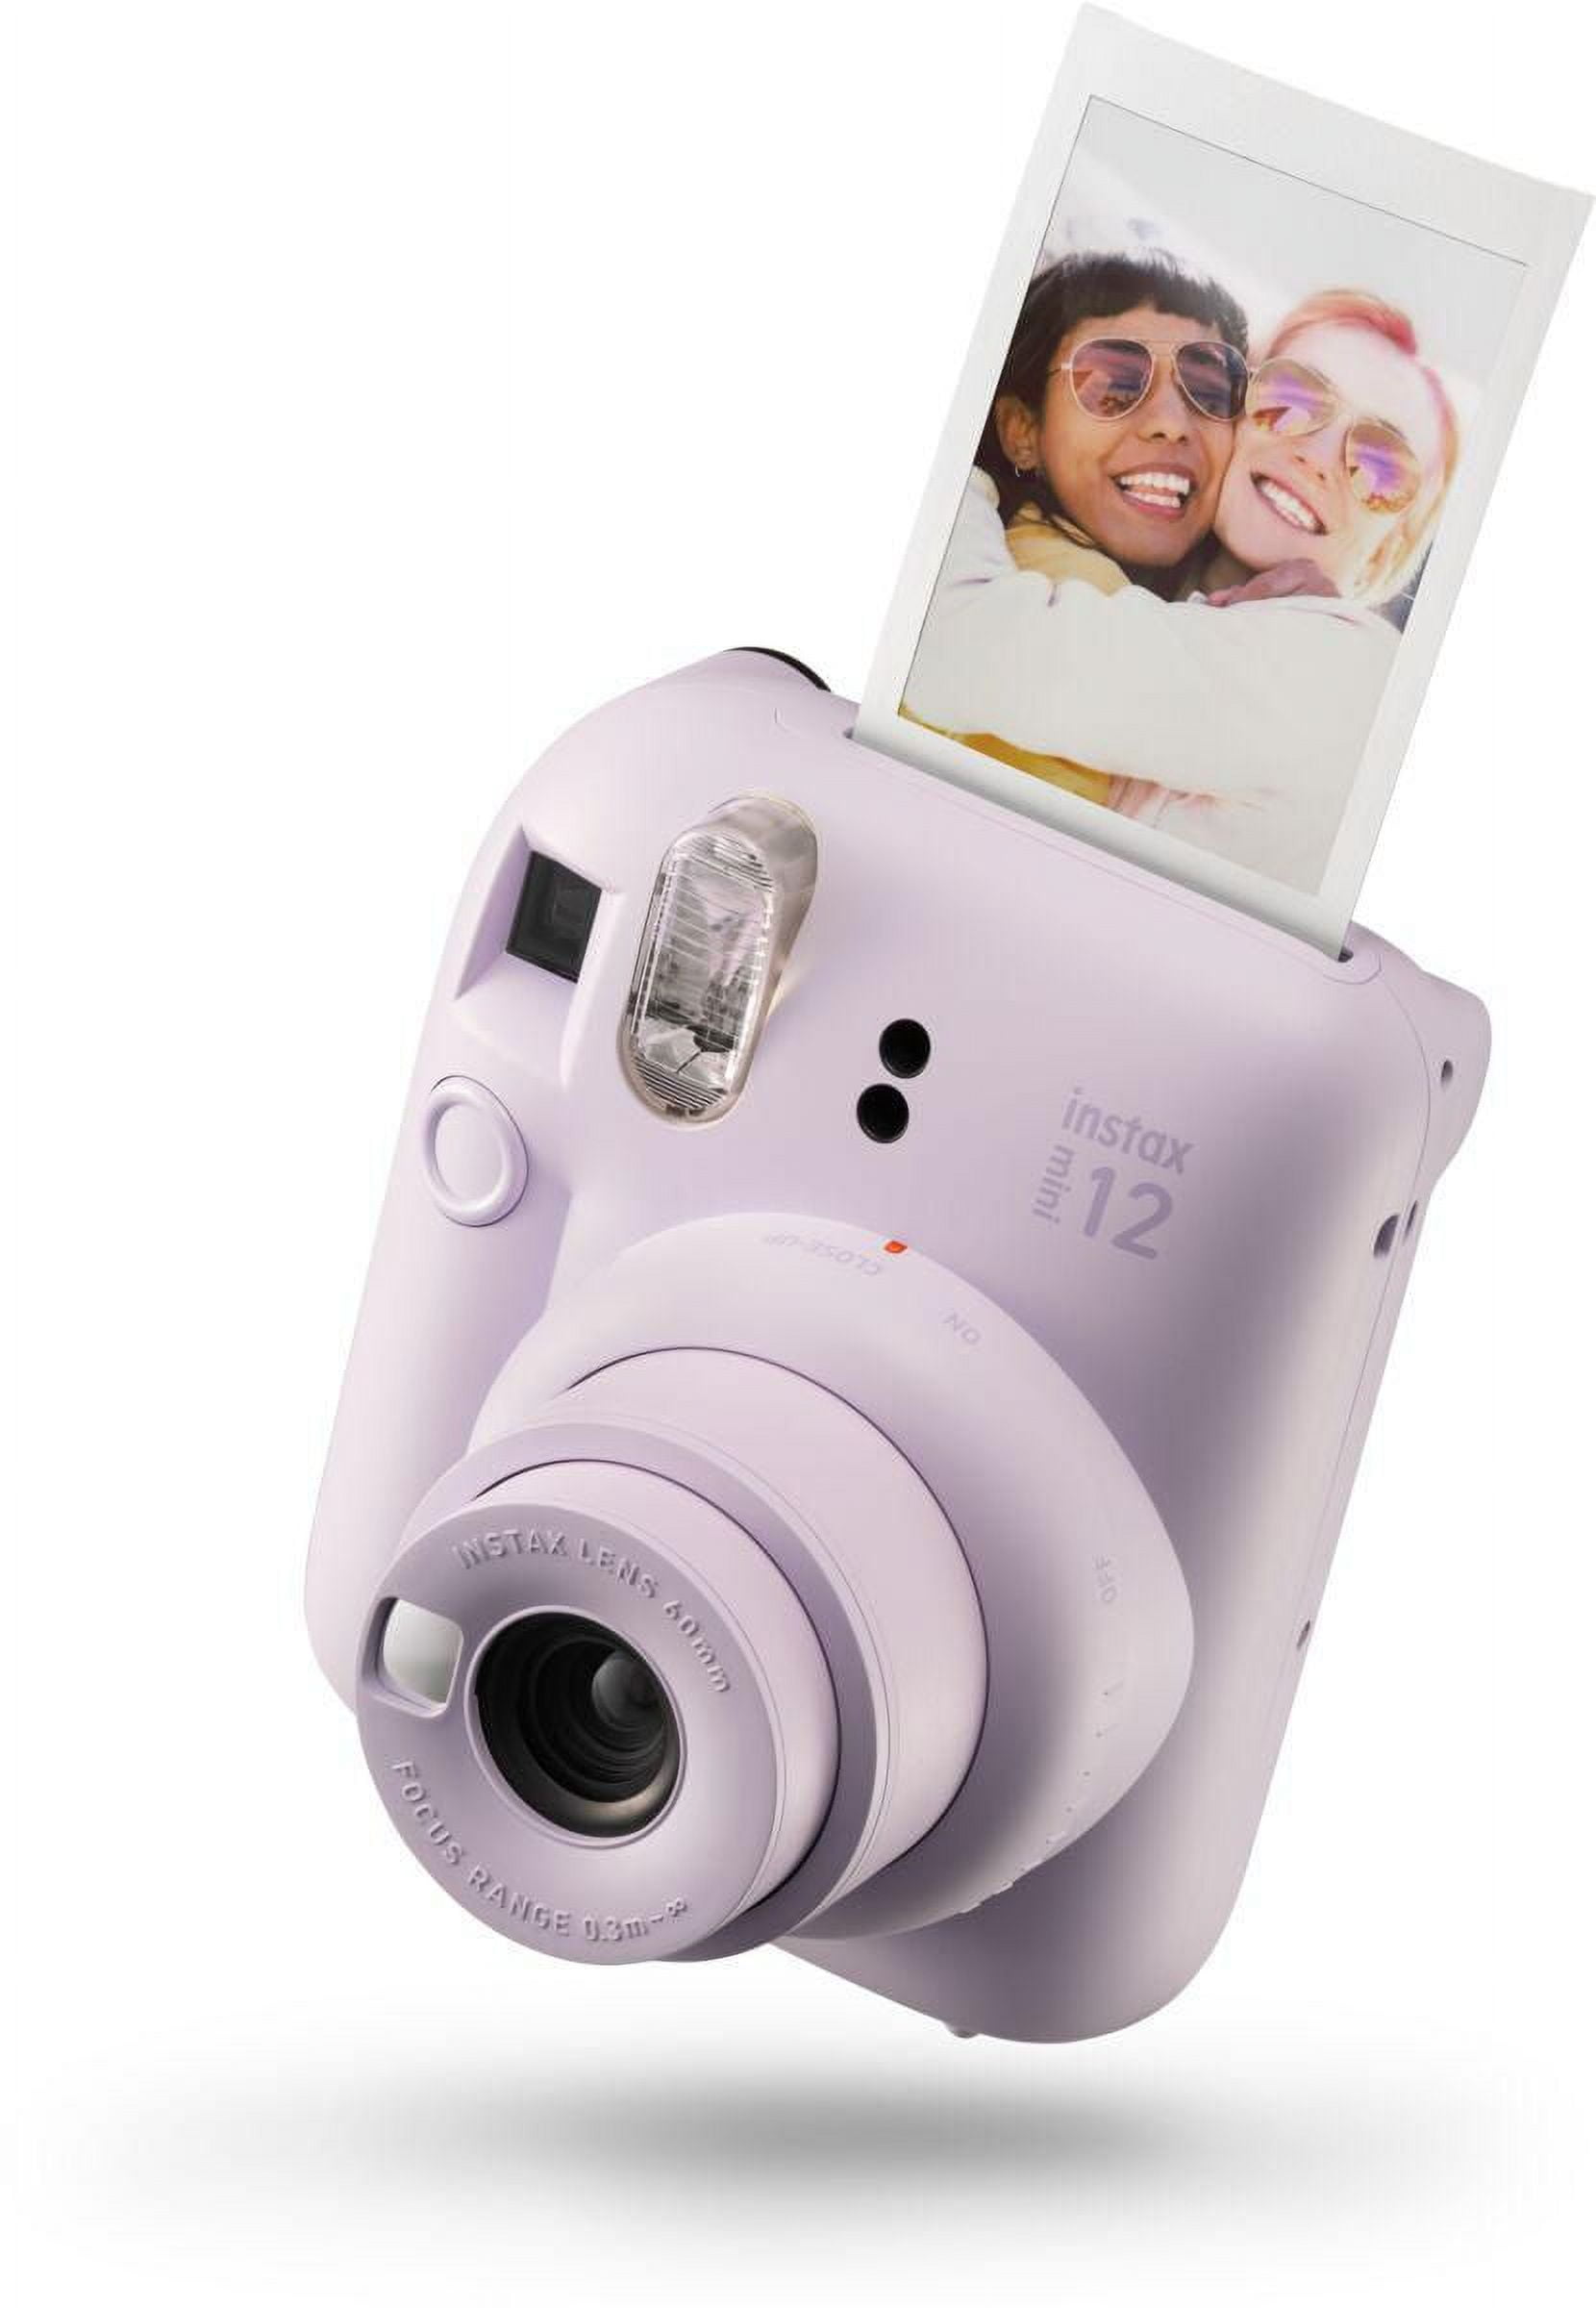 Fujifilm Instax Mini EVO Hybrid Instant Film Camera (Black) (16745183)  Bundle with 20 Instant Film Sheets + 32GB Memory Card + Small Padded Case +  SD